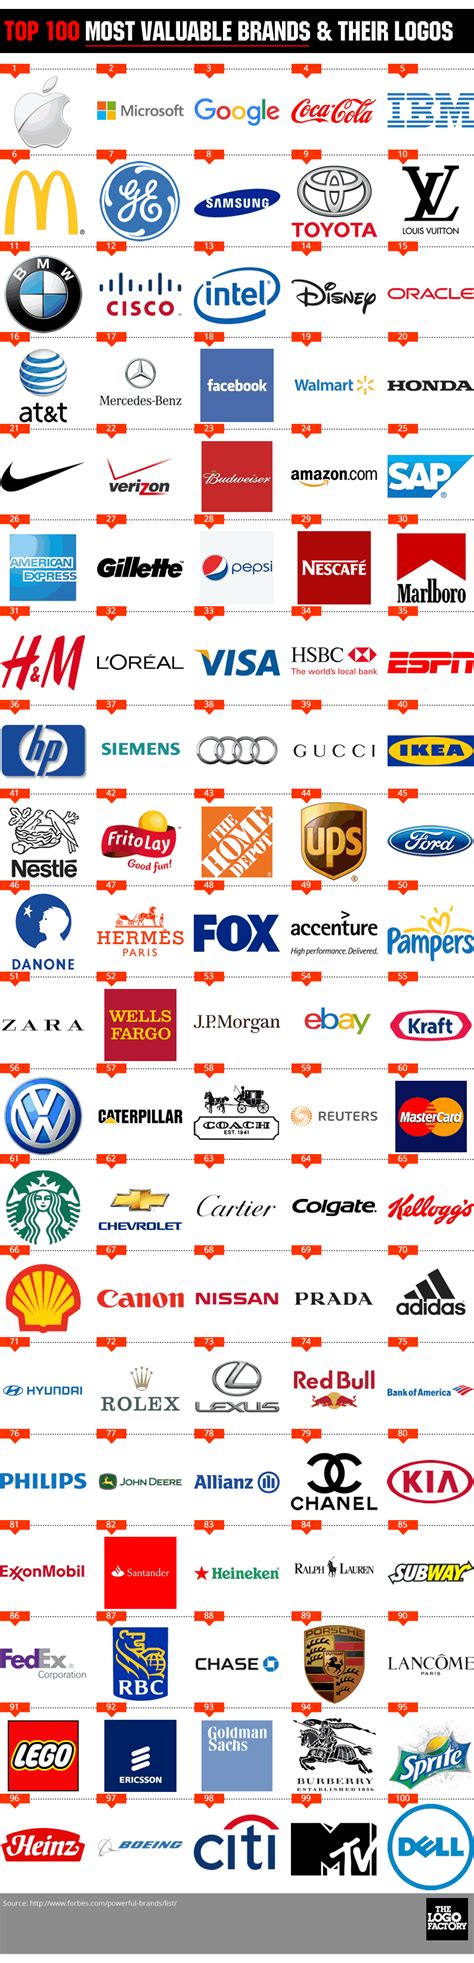 Top 100 Brand Logos